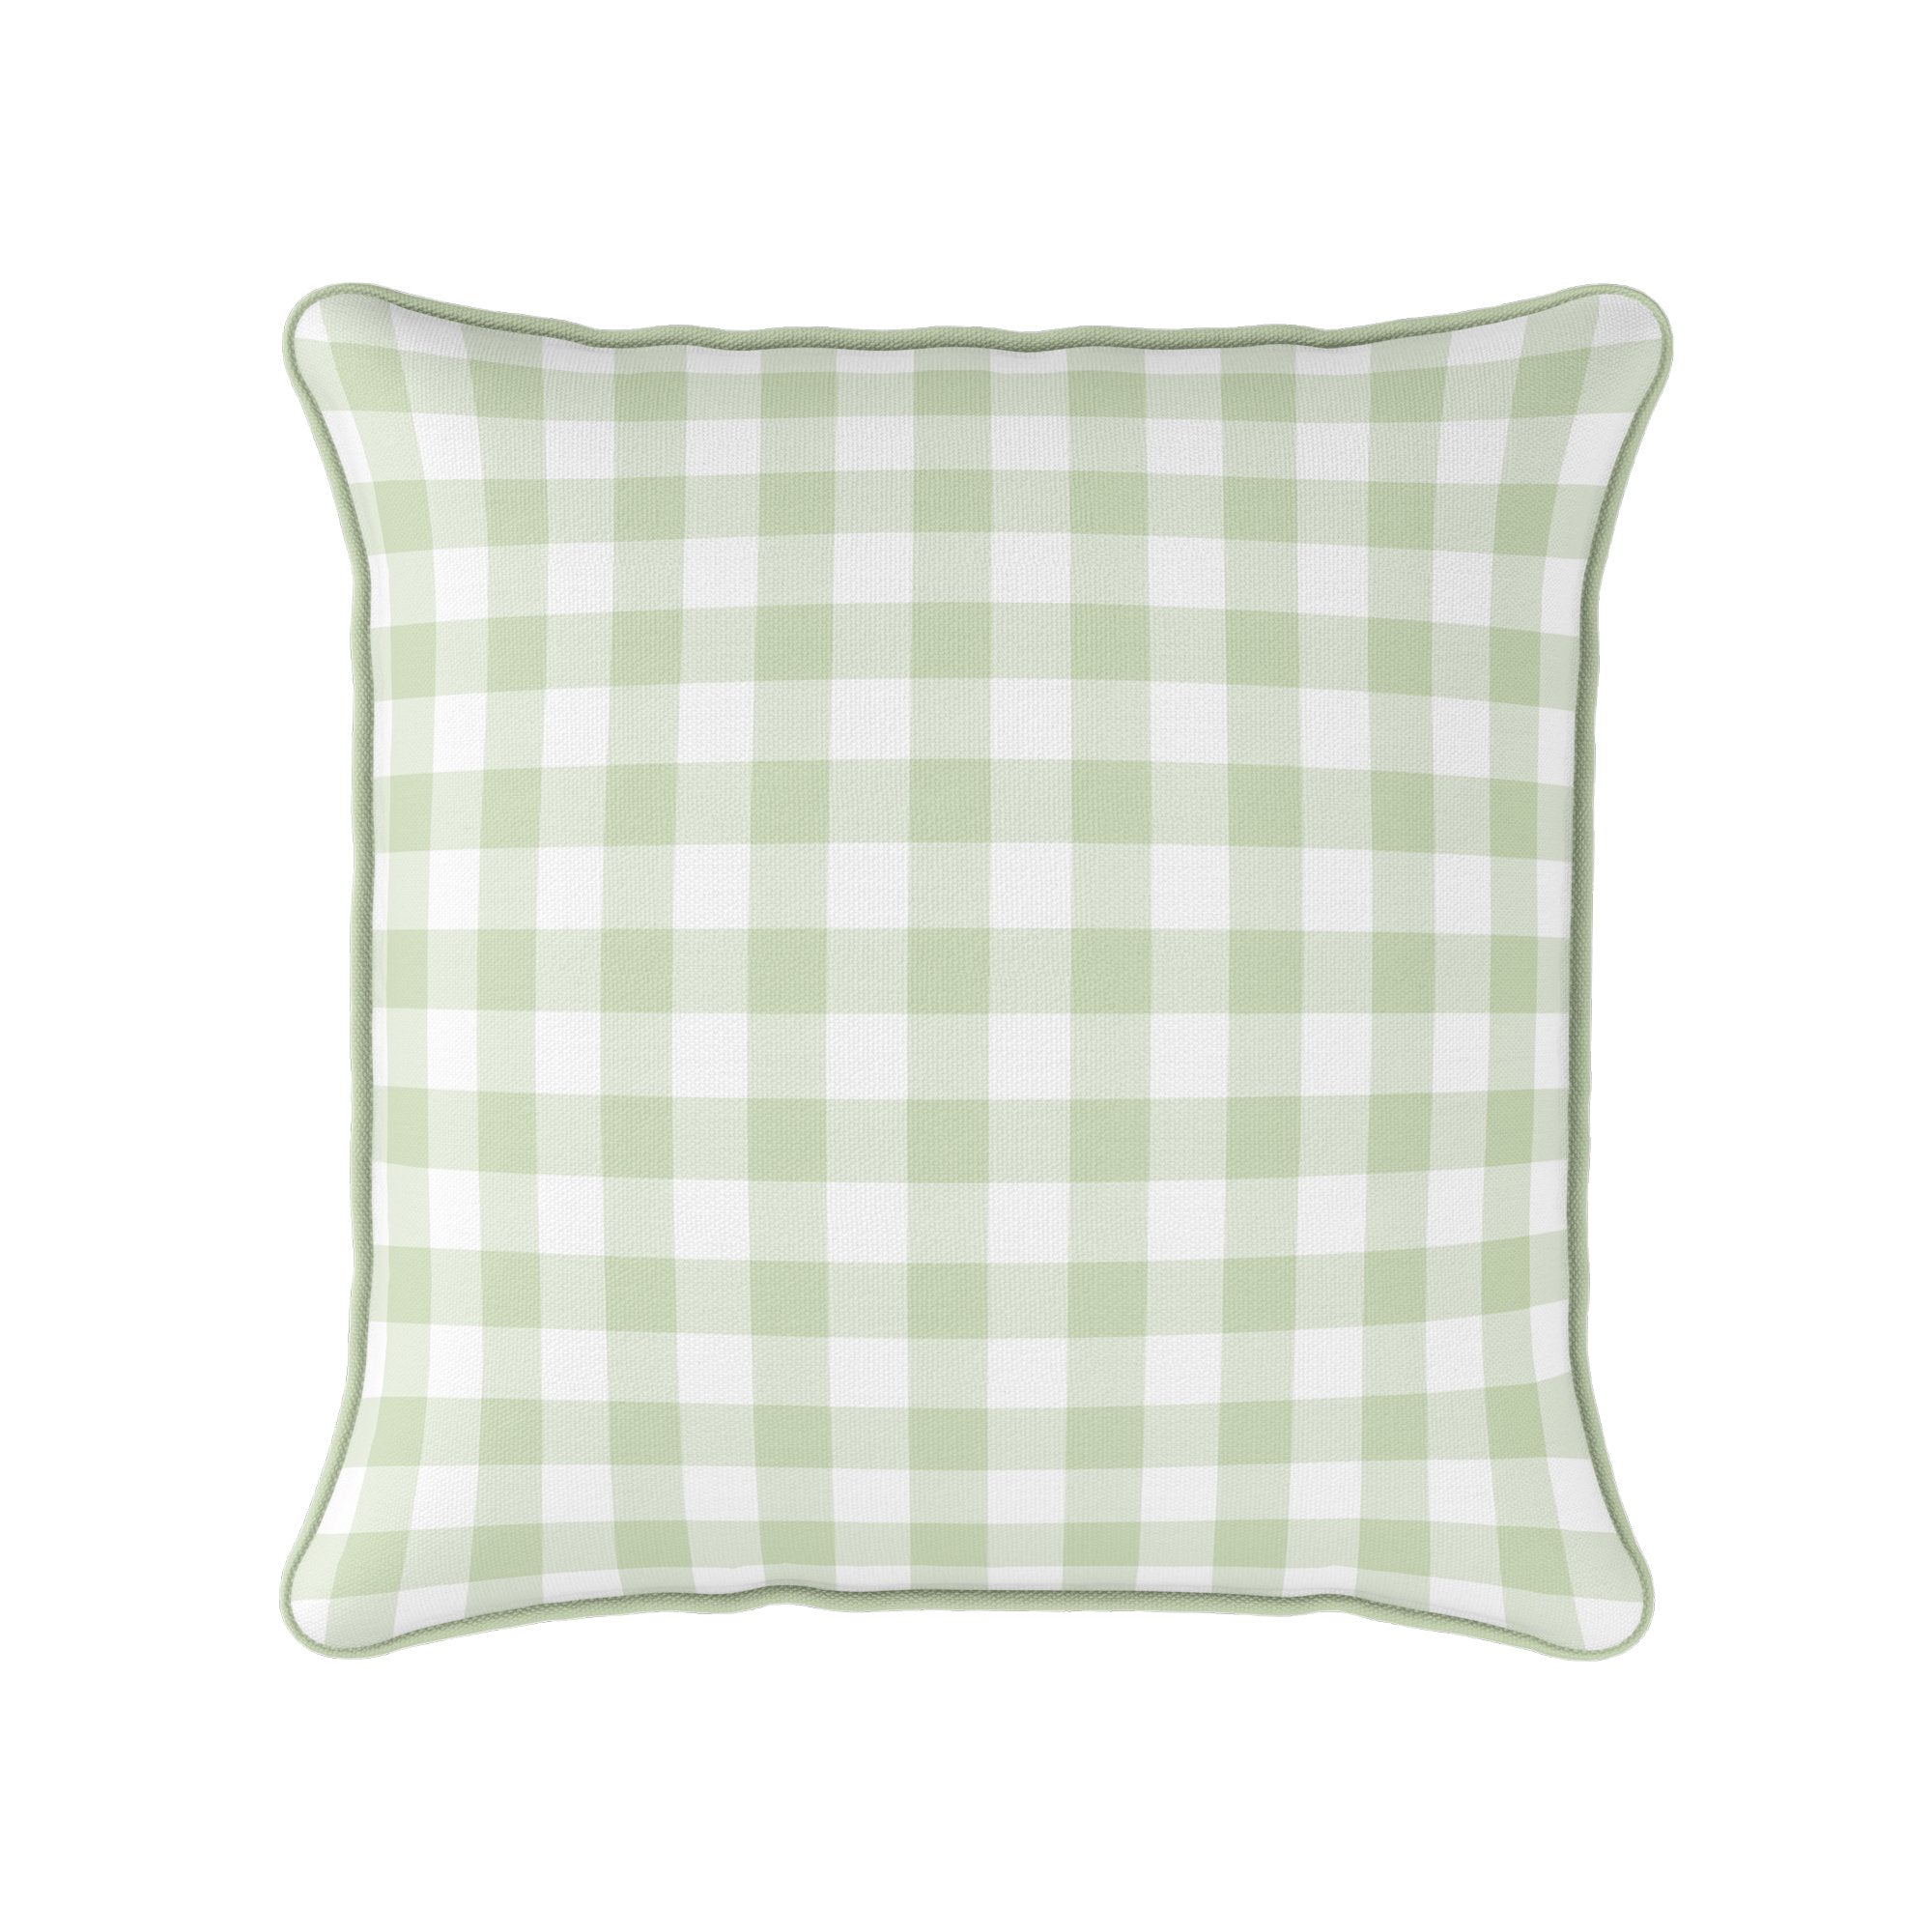 Gingham Check Small Cushion - Greens - Hydrangea Lane Home